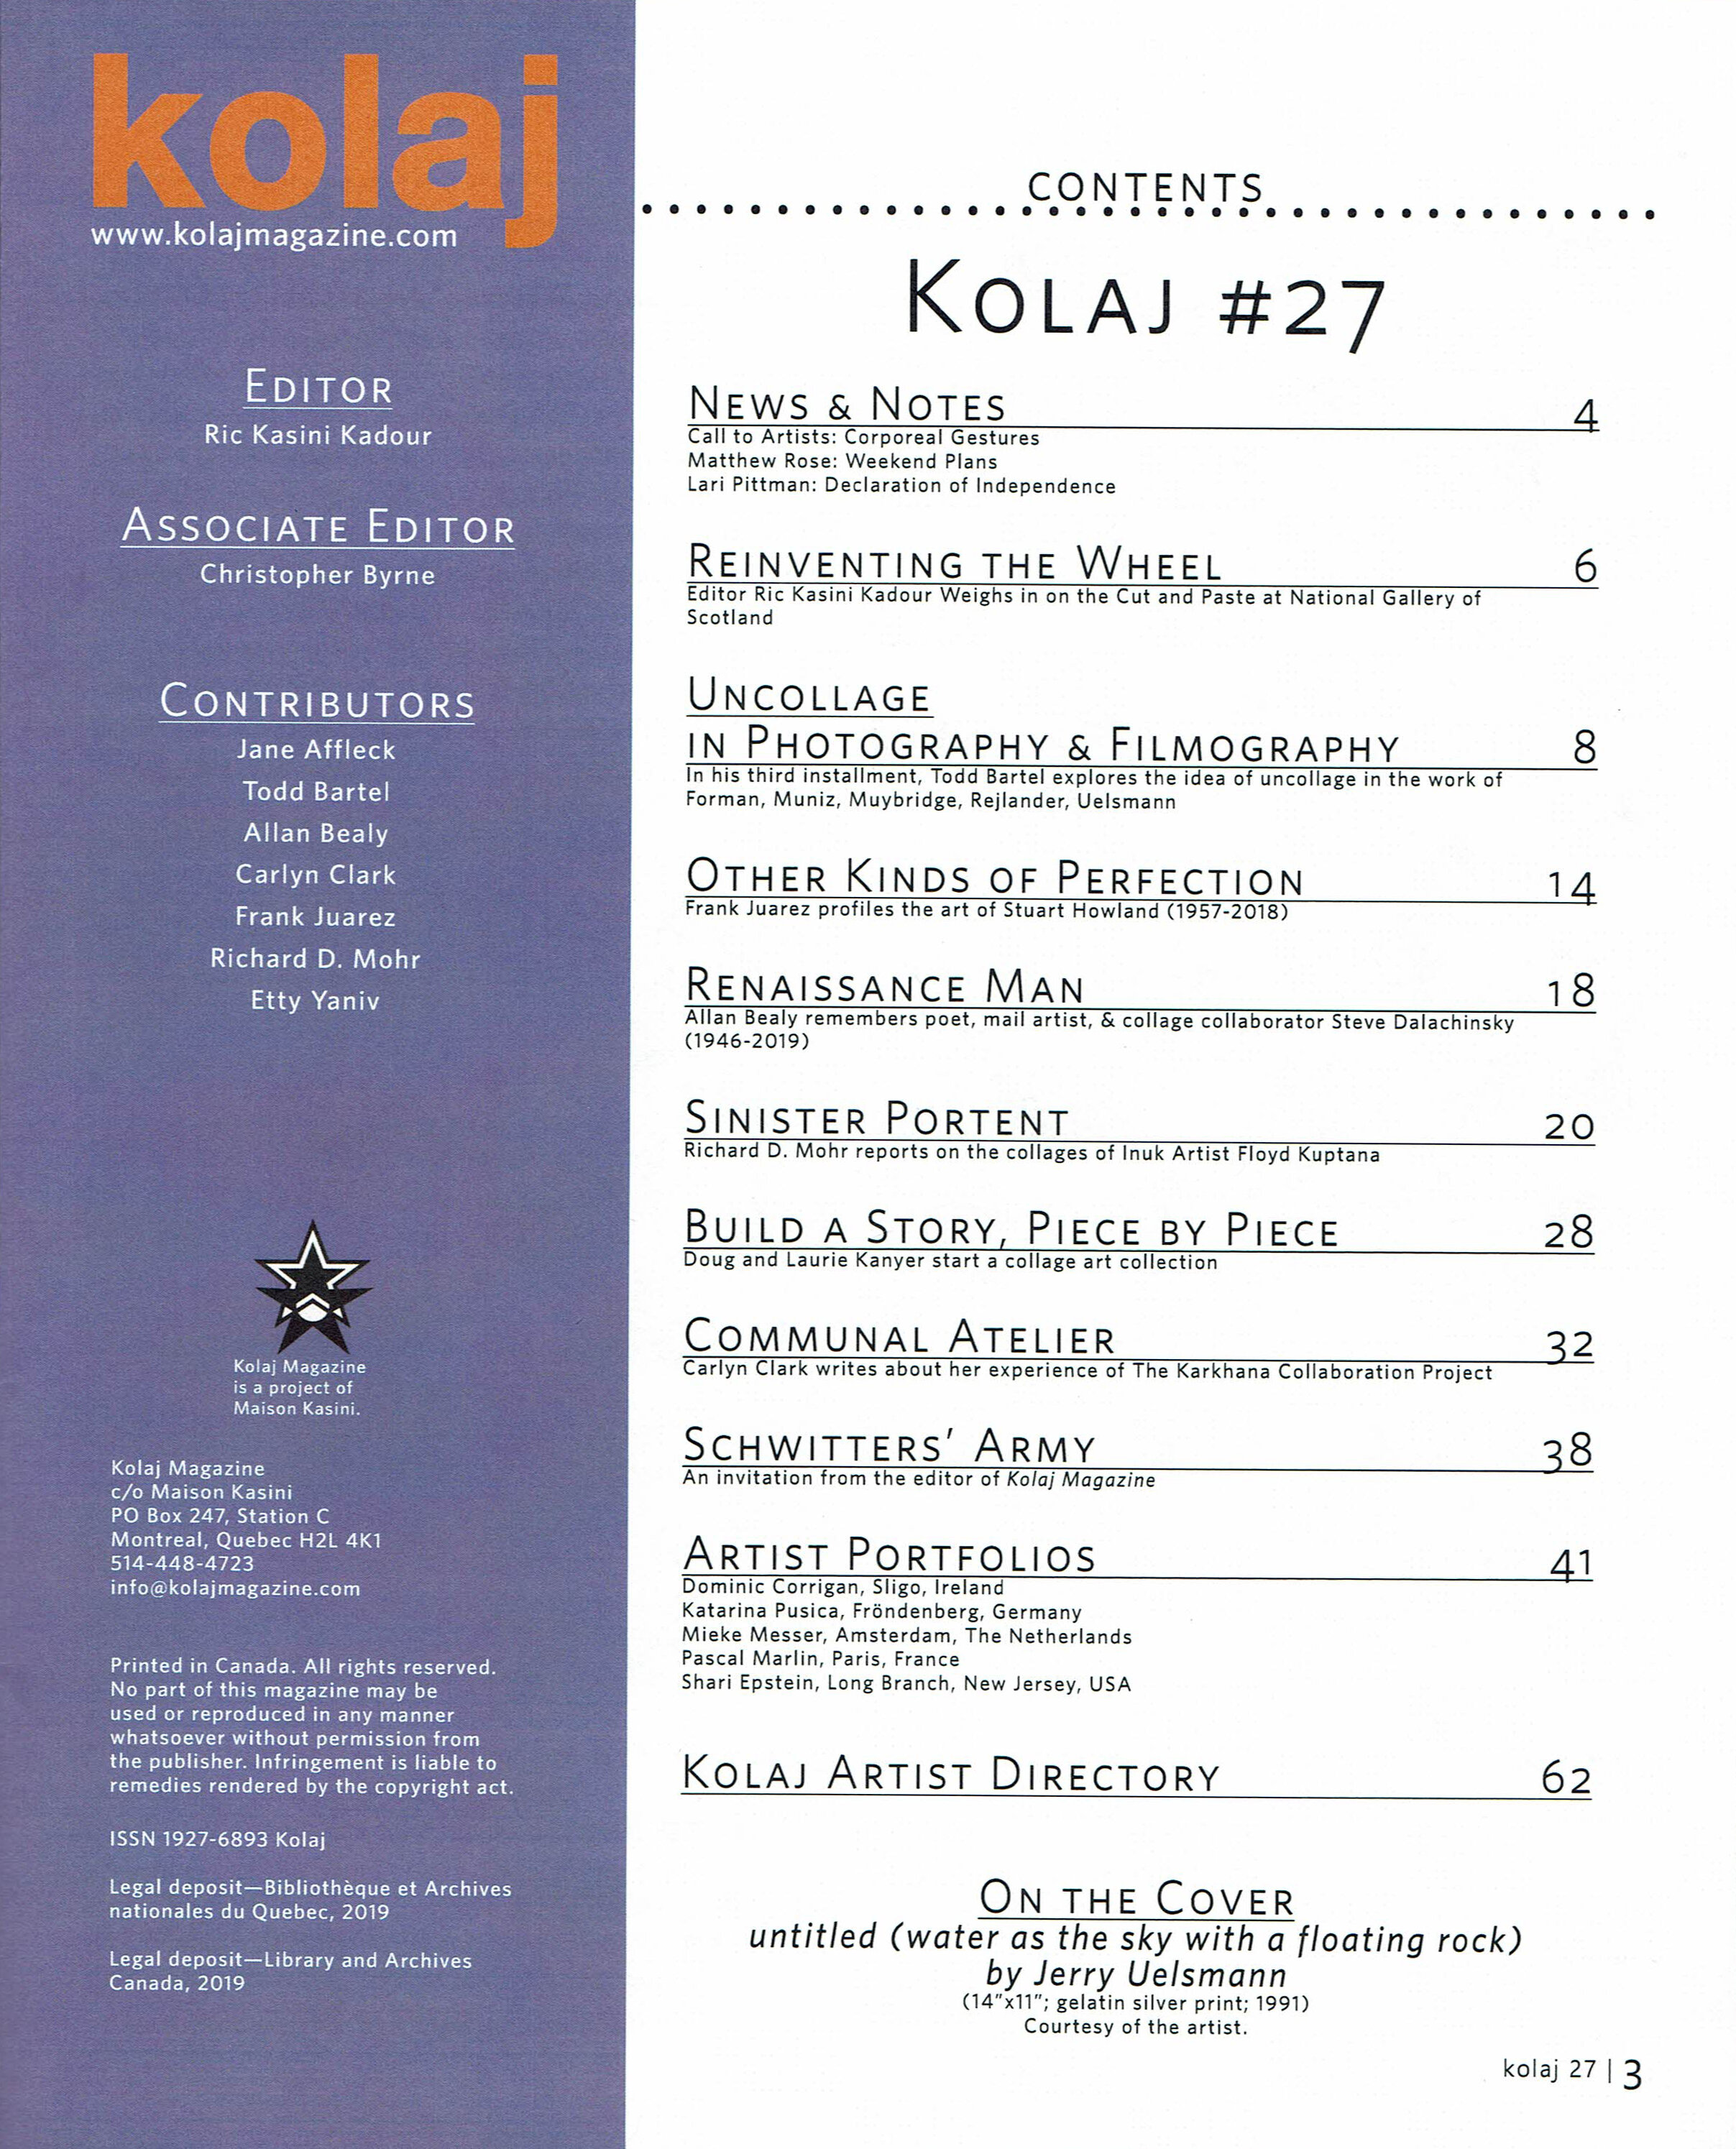 kolaj mag 27 title page.jpg